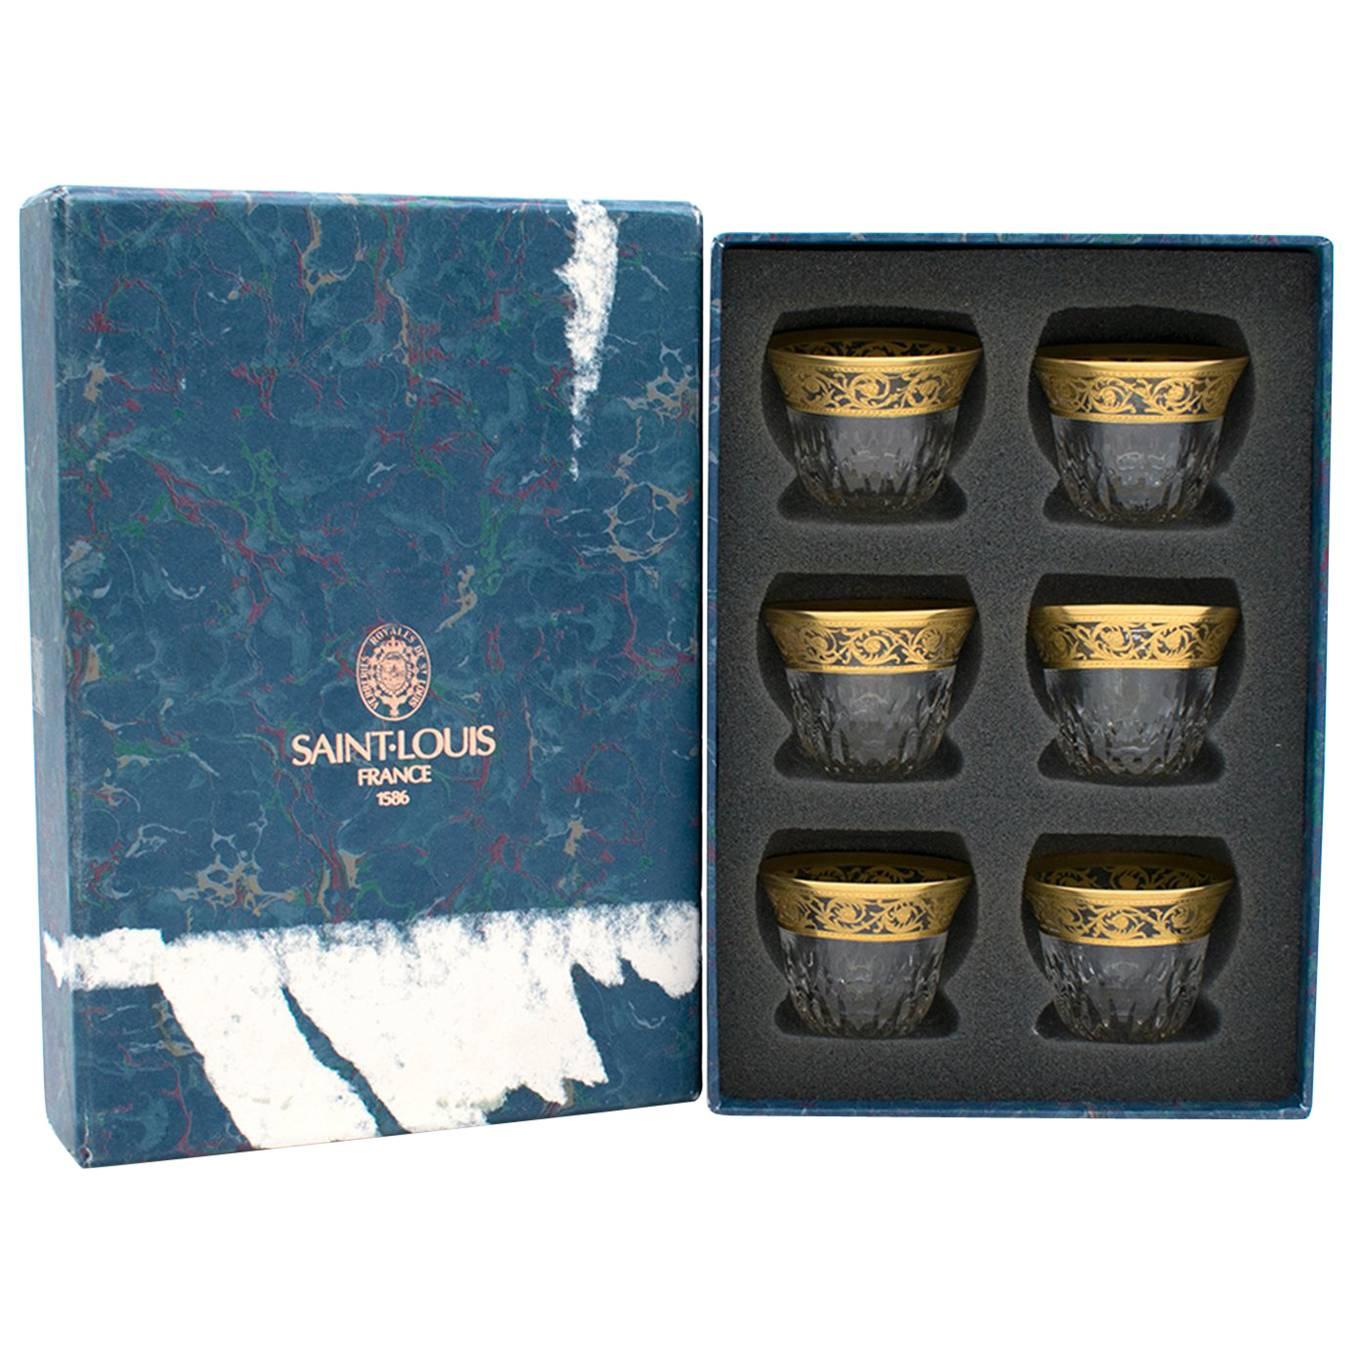 Hermes St. Louis Thistle Set of Six Gold Tea Cups